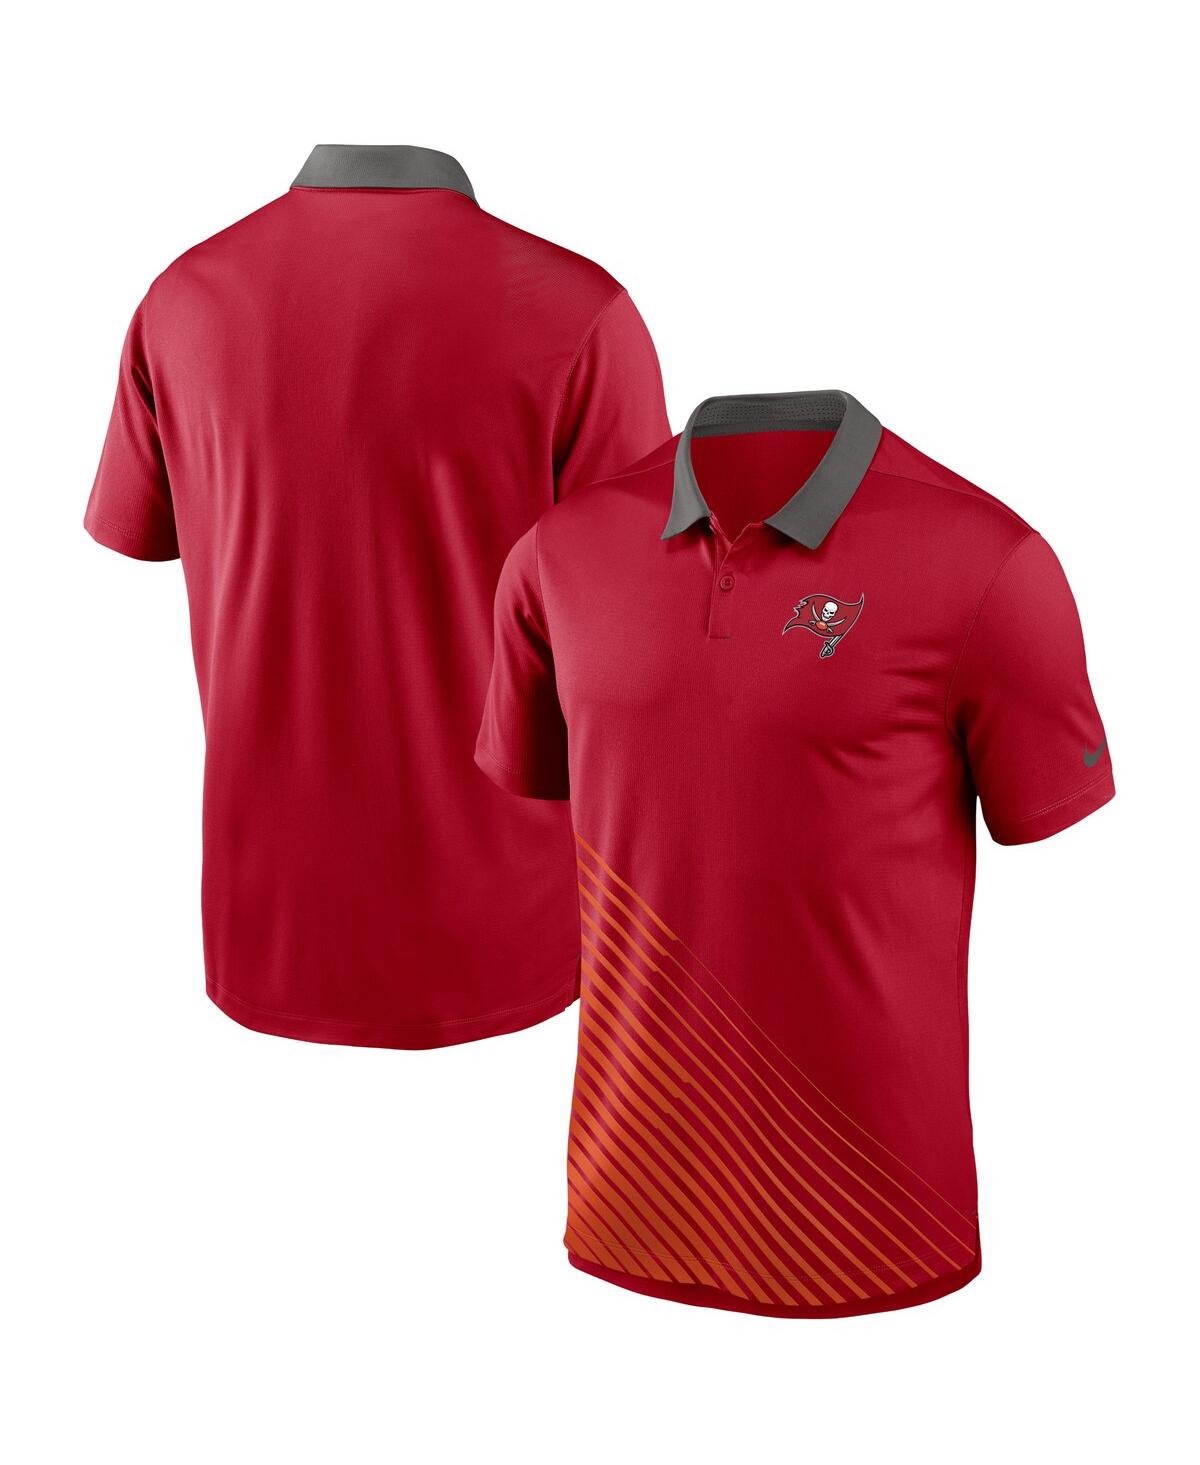 Men's Nike Red Tampa Bay Buccaneers Vapor Performance Polo Shirt - Red